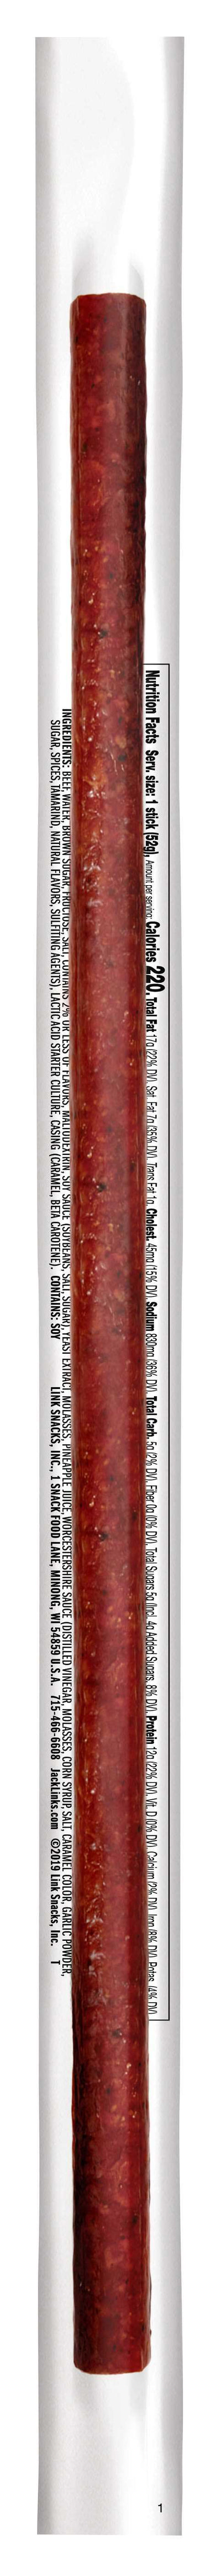 Jack Link's Beef Meat Sticks Variety Pack, Original, Teriyaki, Peppered, 1.84 oz, 24 Count Box